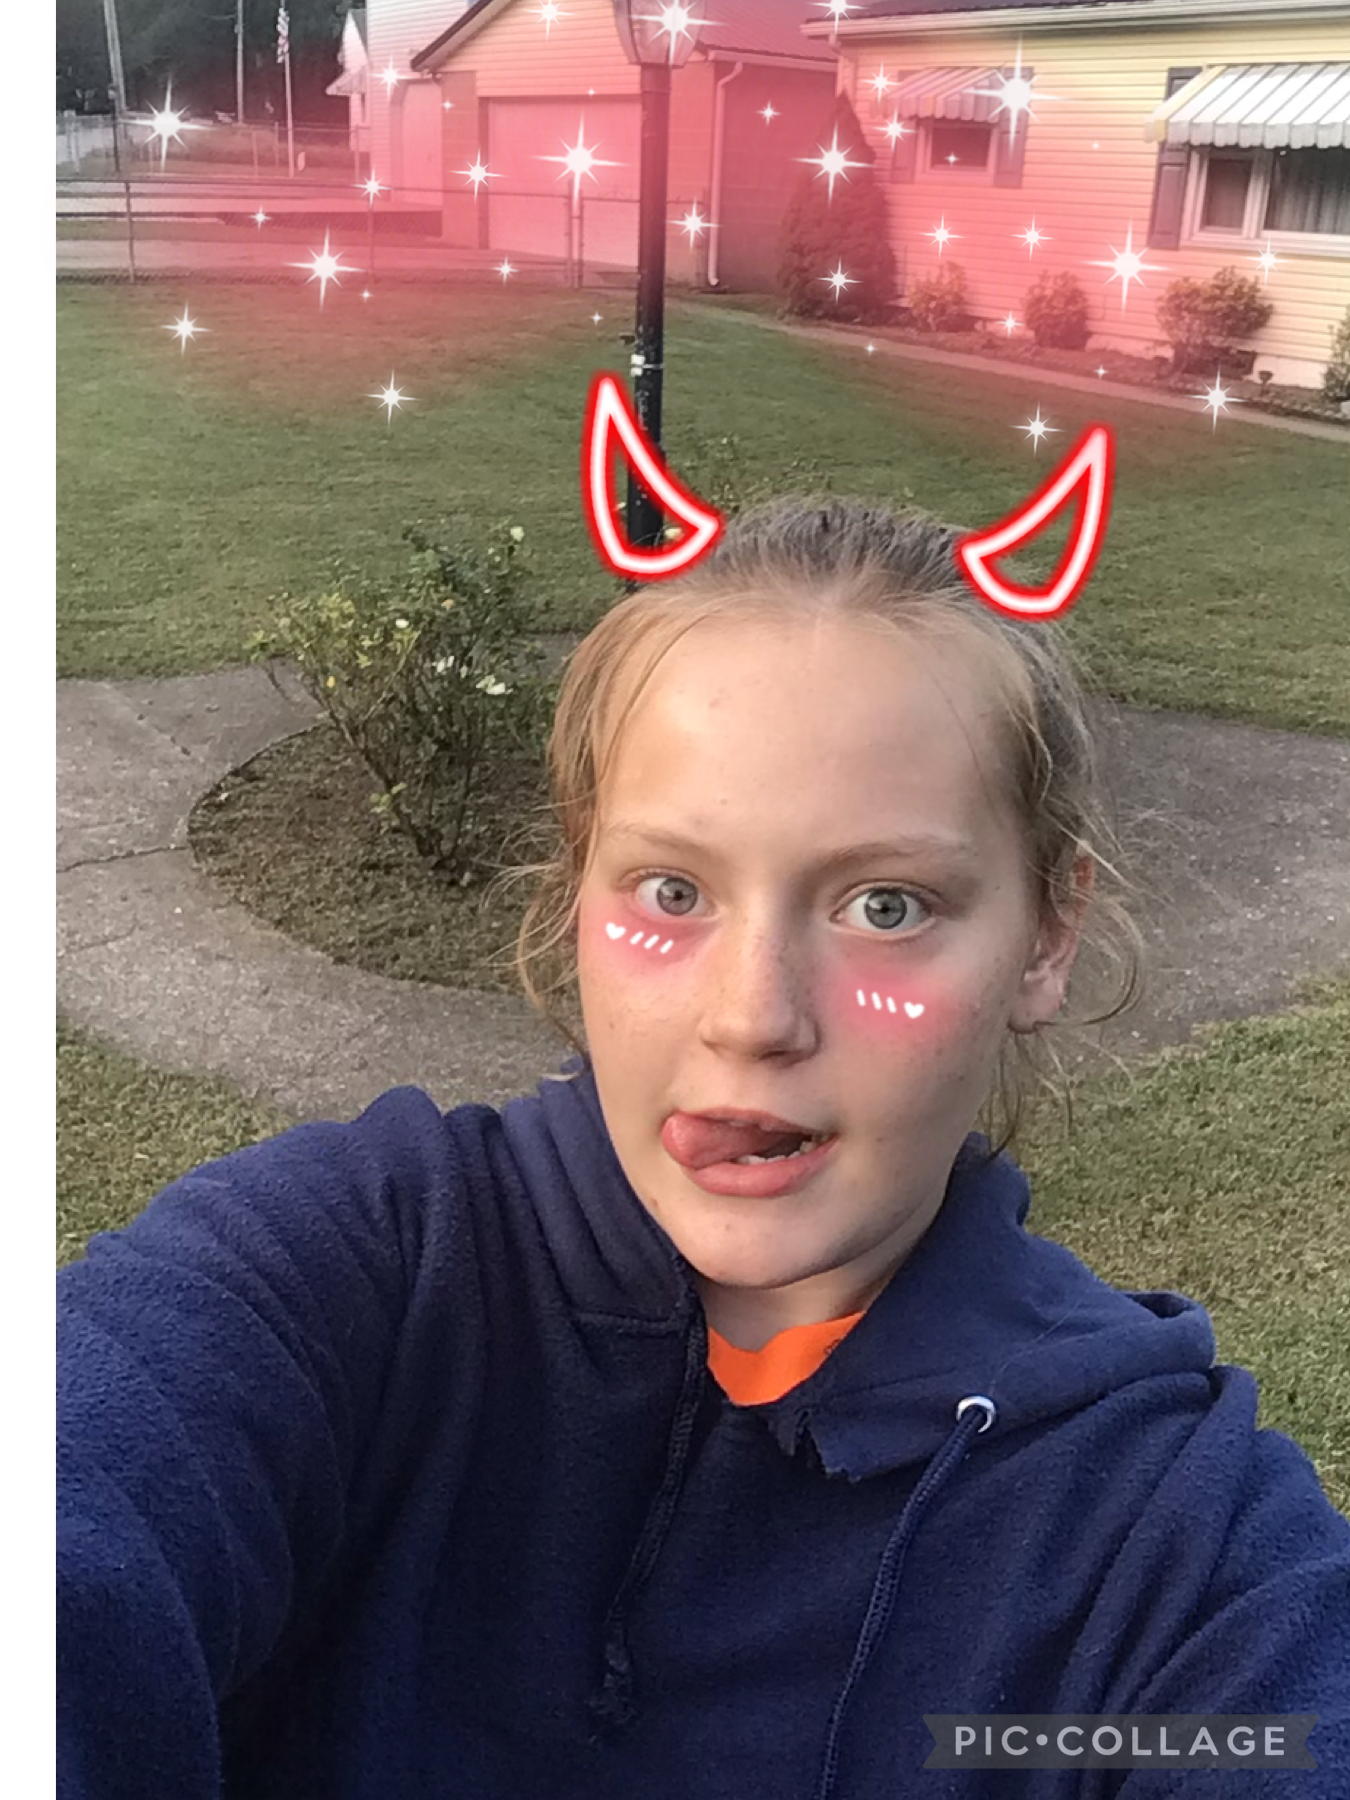 I’m the devil